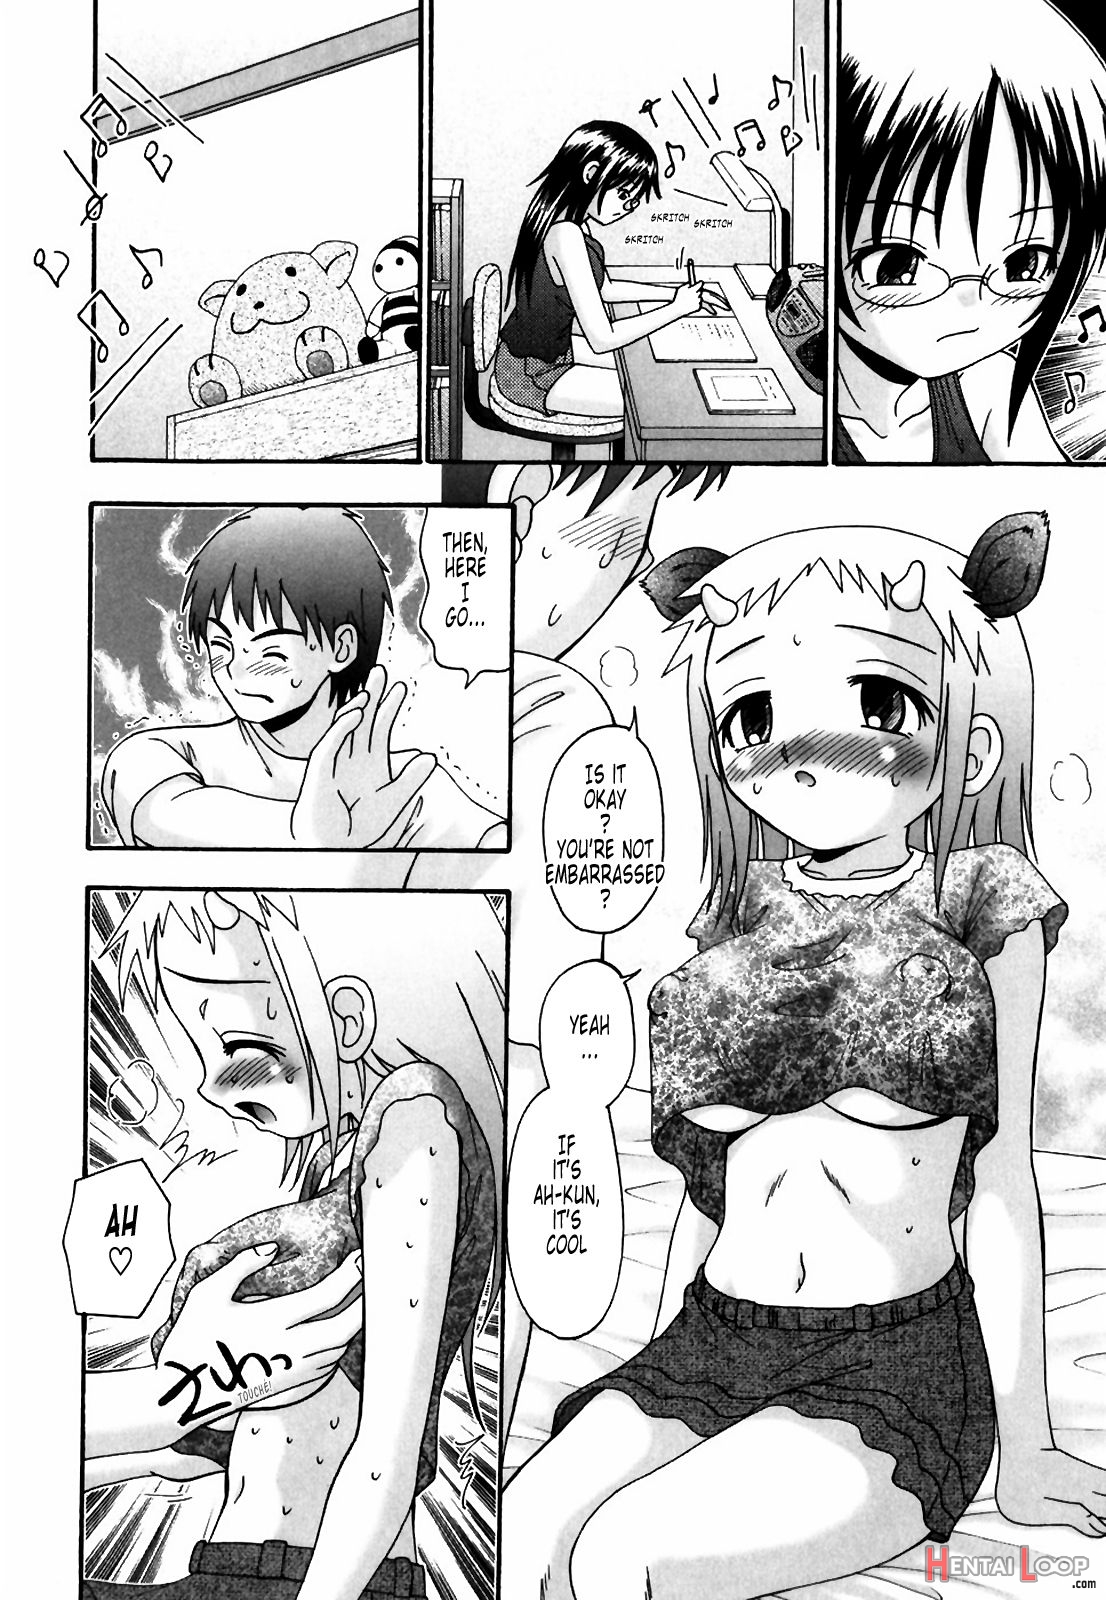 Tsukumimi 1&2 page 70